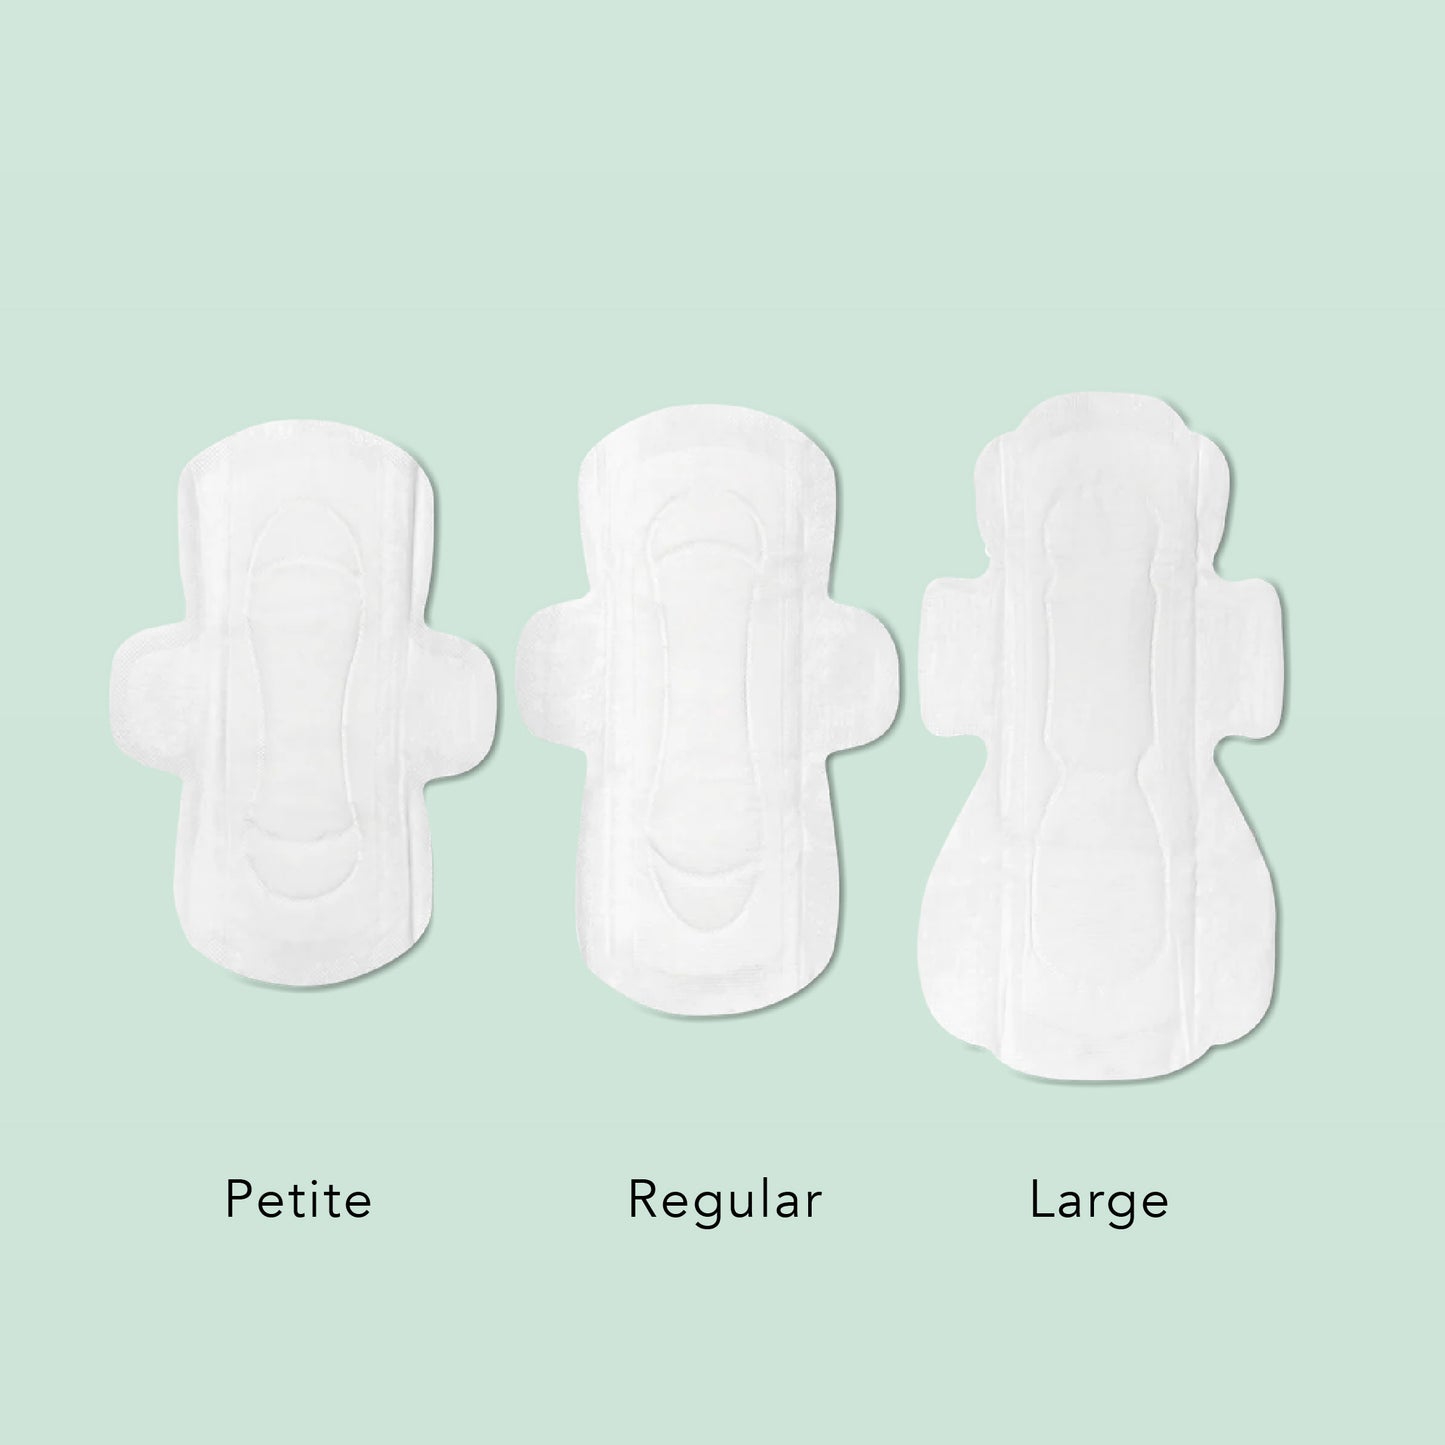 [ Rael ] ผ้าอนามัยราเอล ออร์แกนิคคอตตอน 28 cm. | Rael Organic Cotton Sanitary Pad | Large